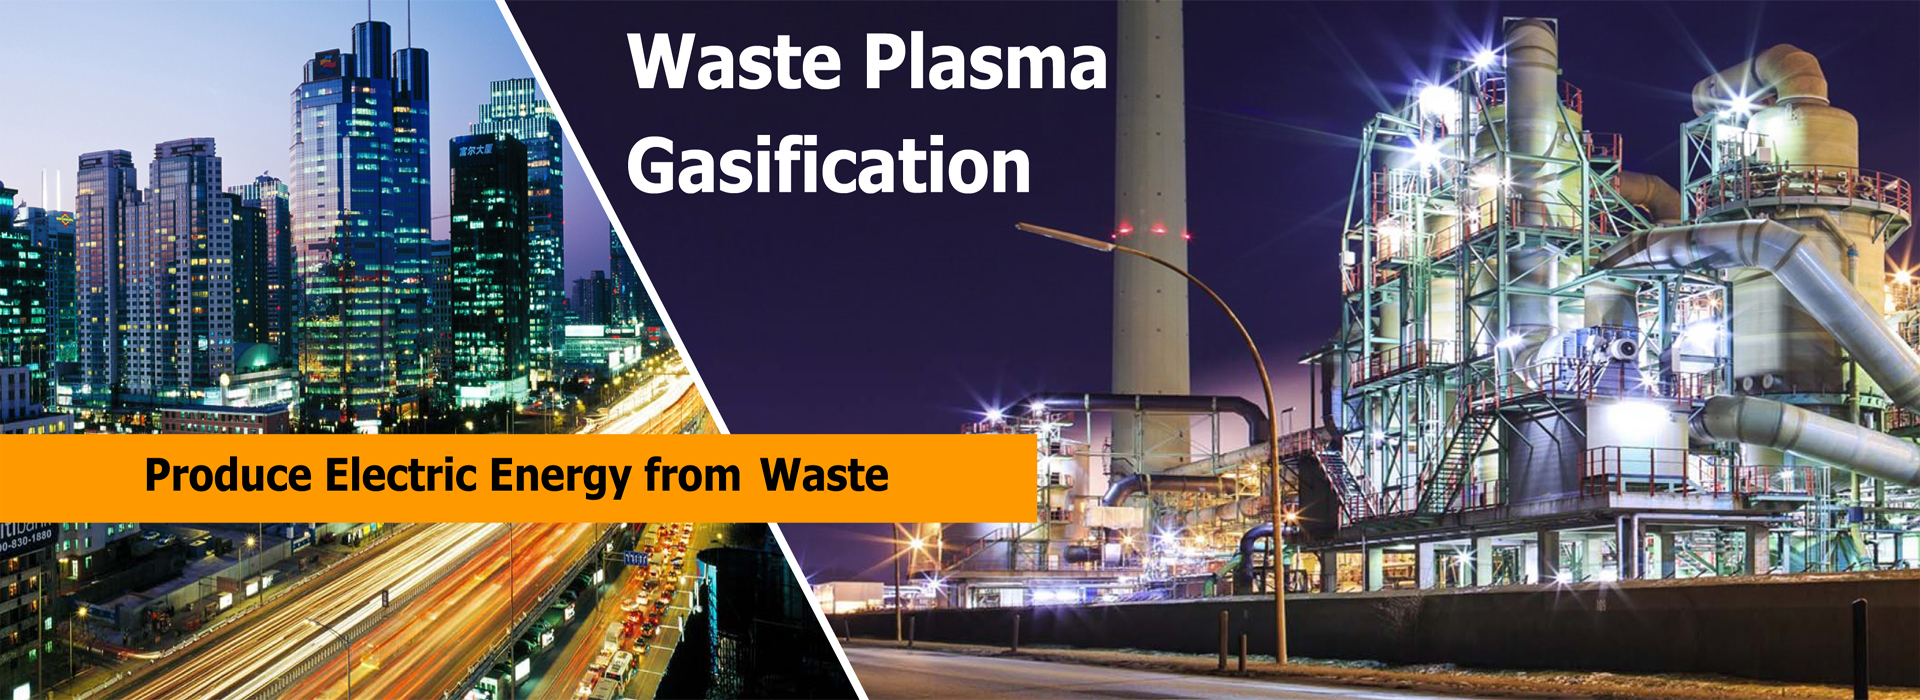 Municipal Solid Waste  Plasma Gasification ITC Ltd